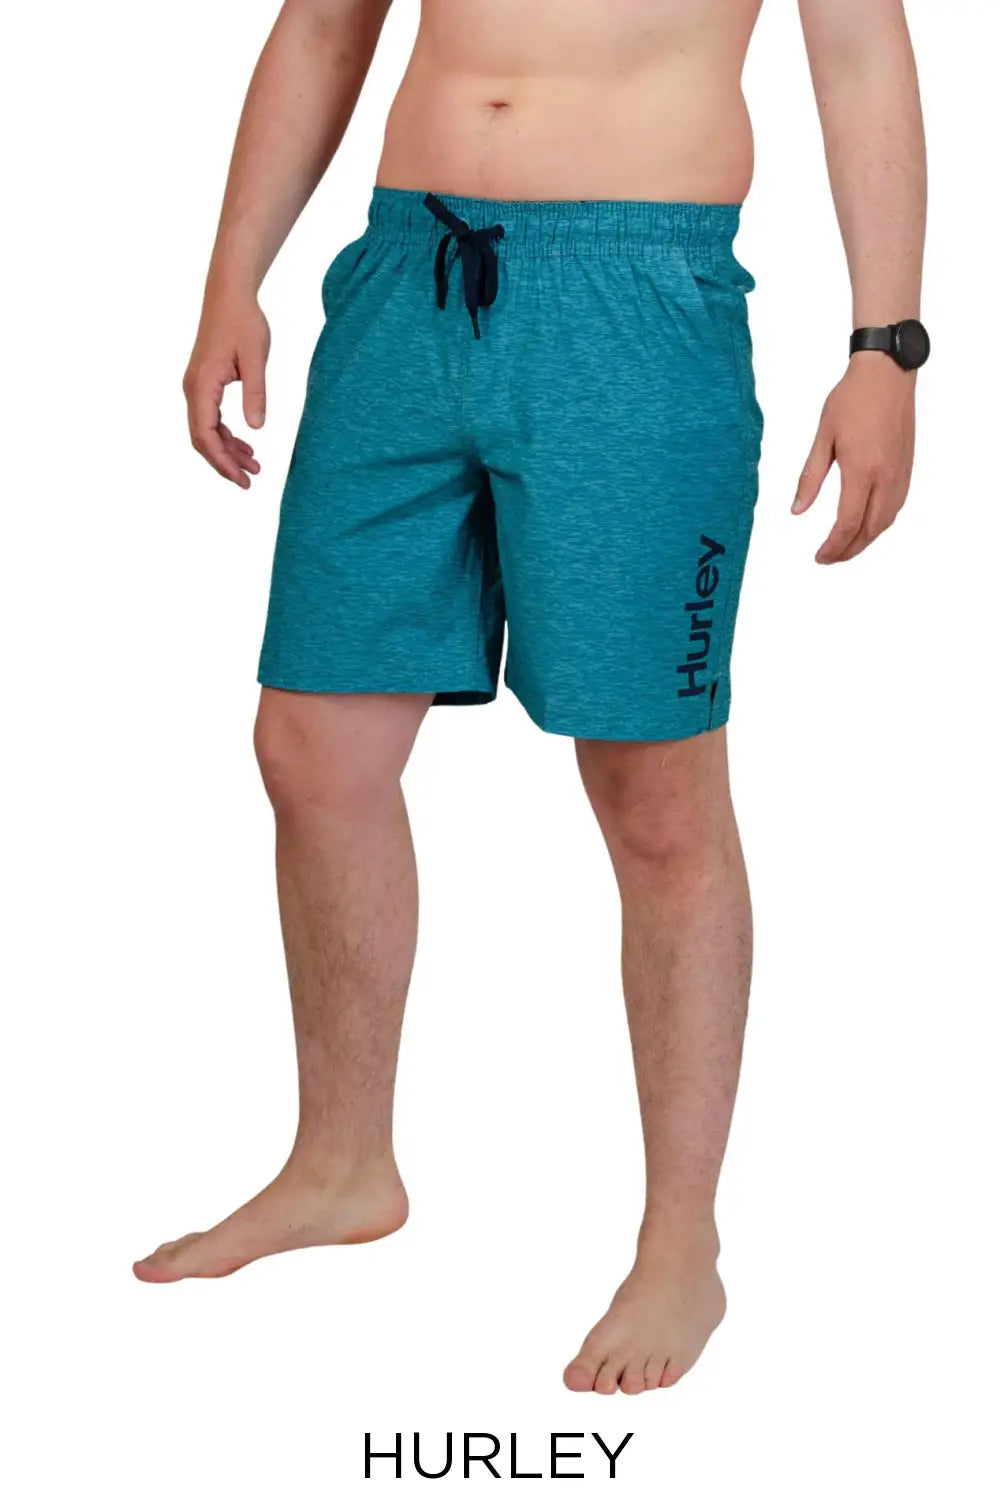 Hurley Board Shorts Swim Trunks Teal / XL